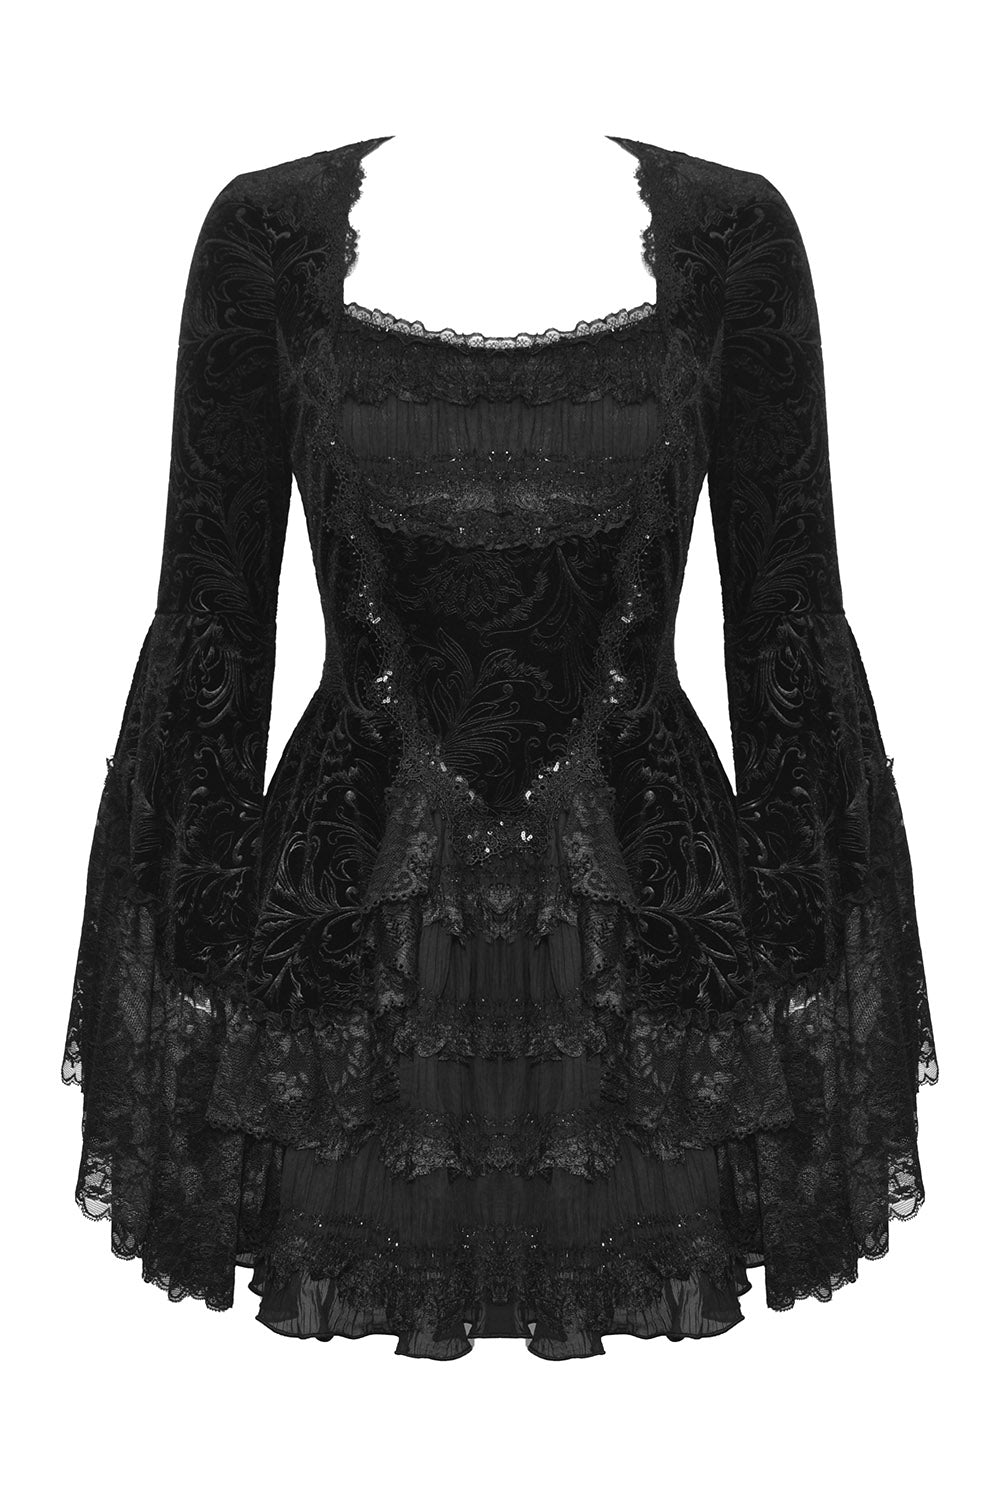 womens black lace and glitter goth dress